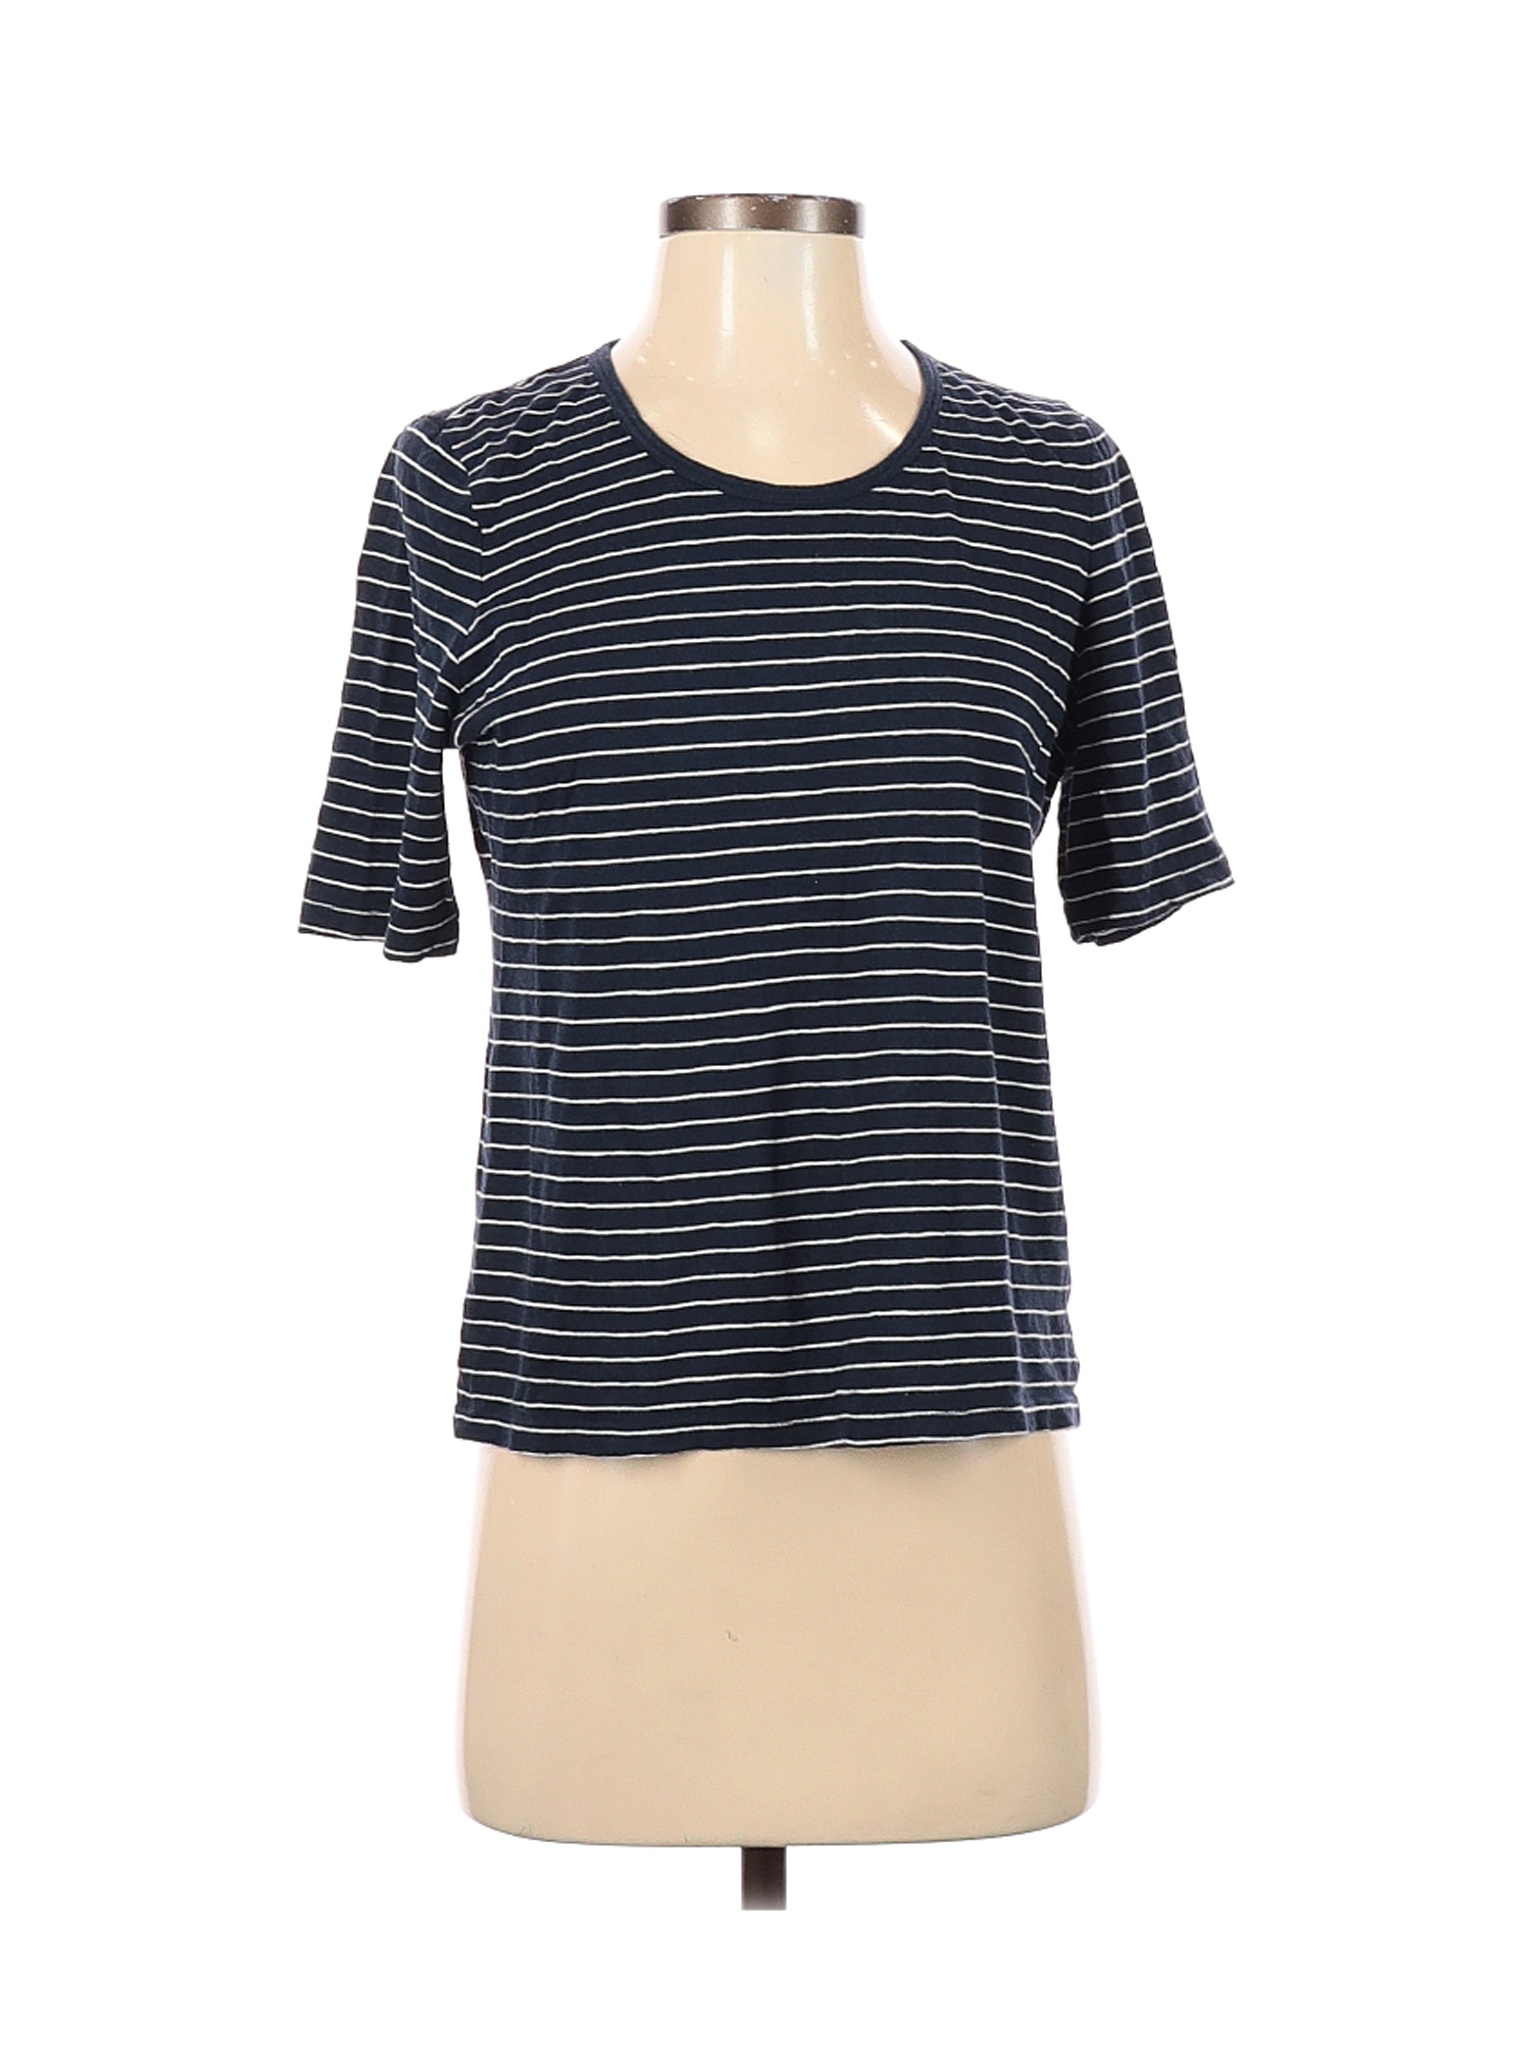 Crown & Ivy Women Blue Short Sleeve T-Shirt S Petites | eBay